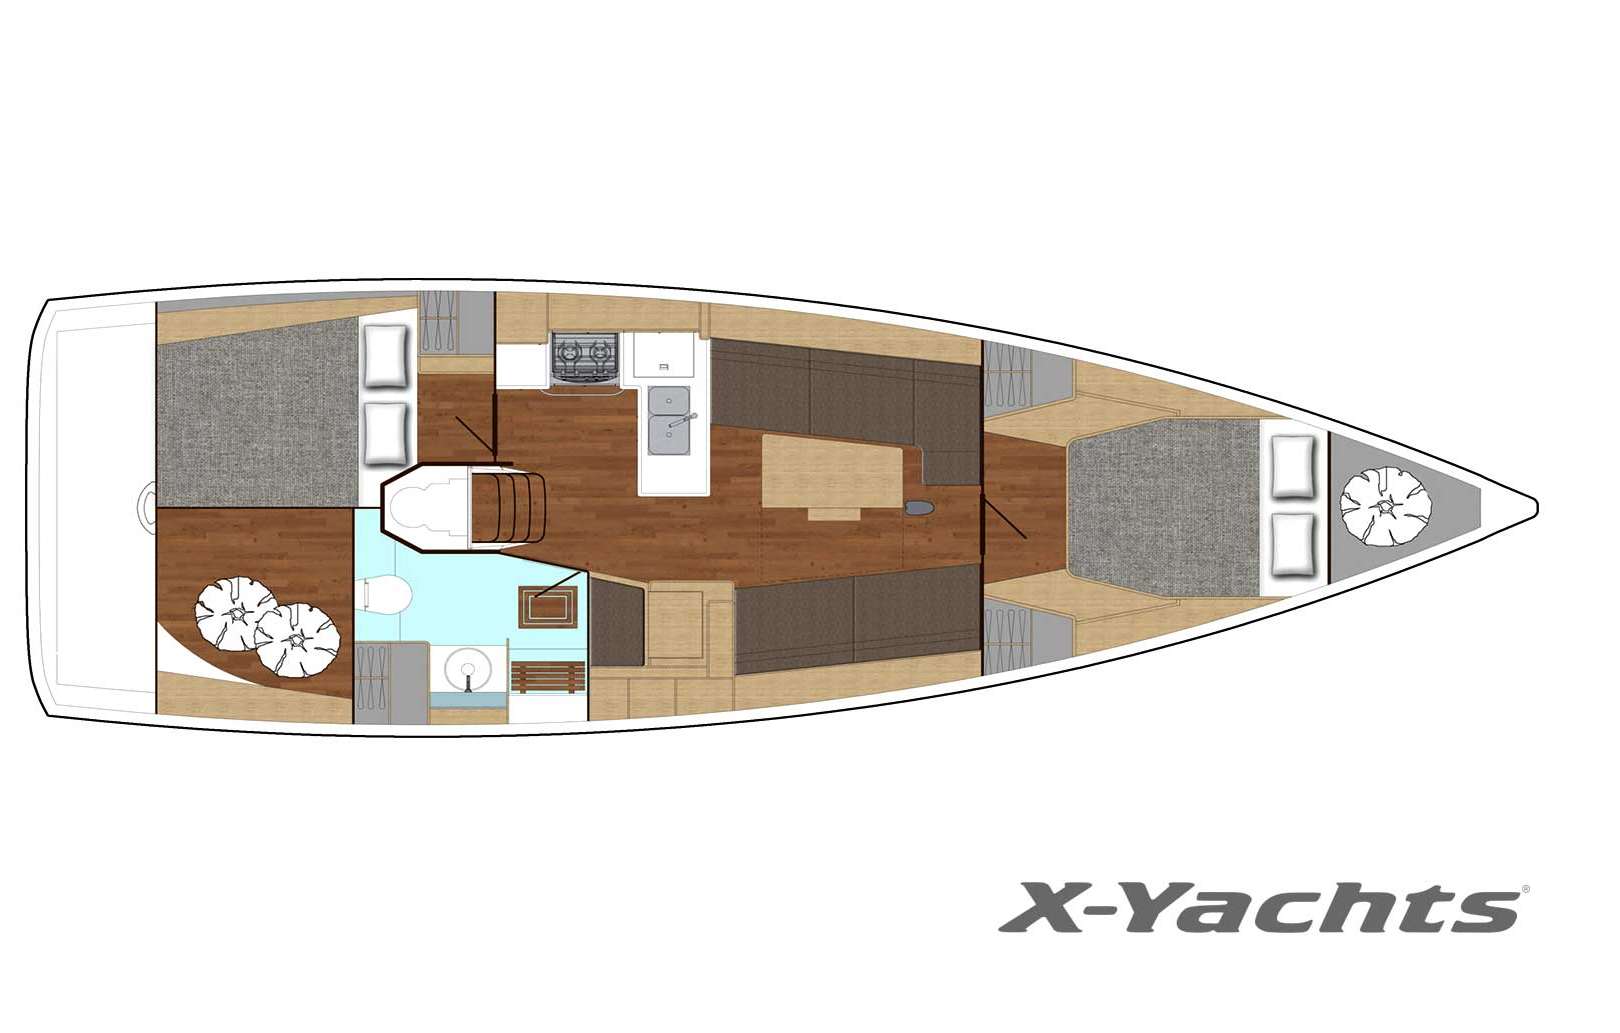 Bateau X-Yachts X4⁰